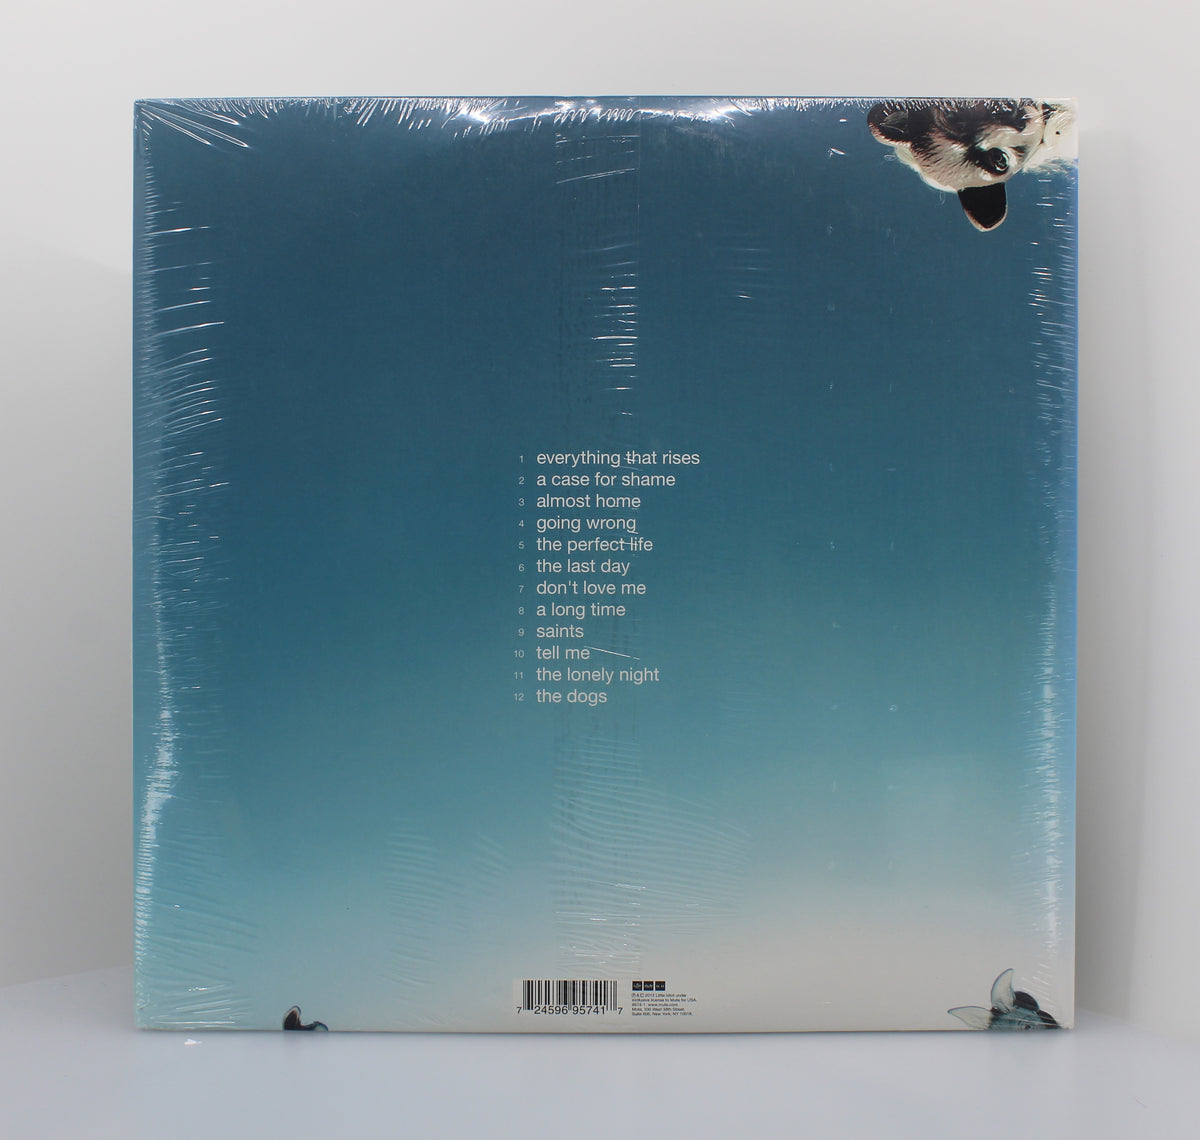 Moby - Innocents, 2 x Vinyl, LP, Album, 180g, Audiophile, USA 2013